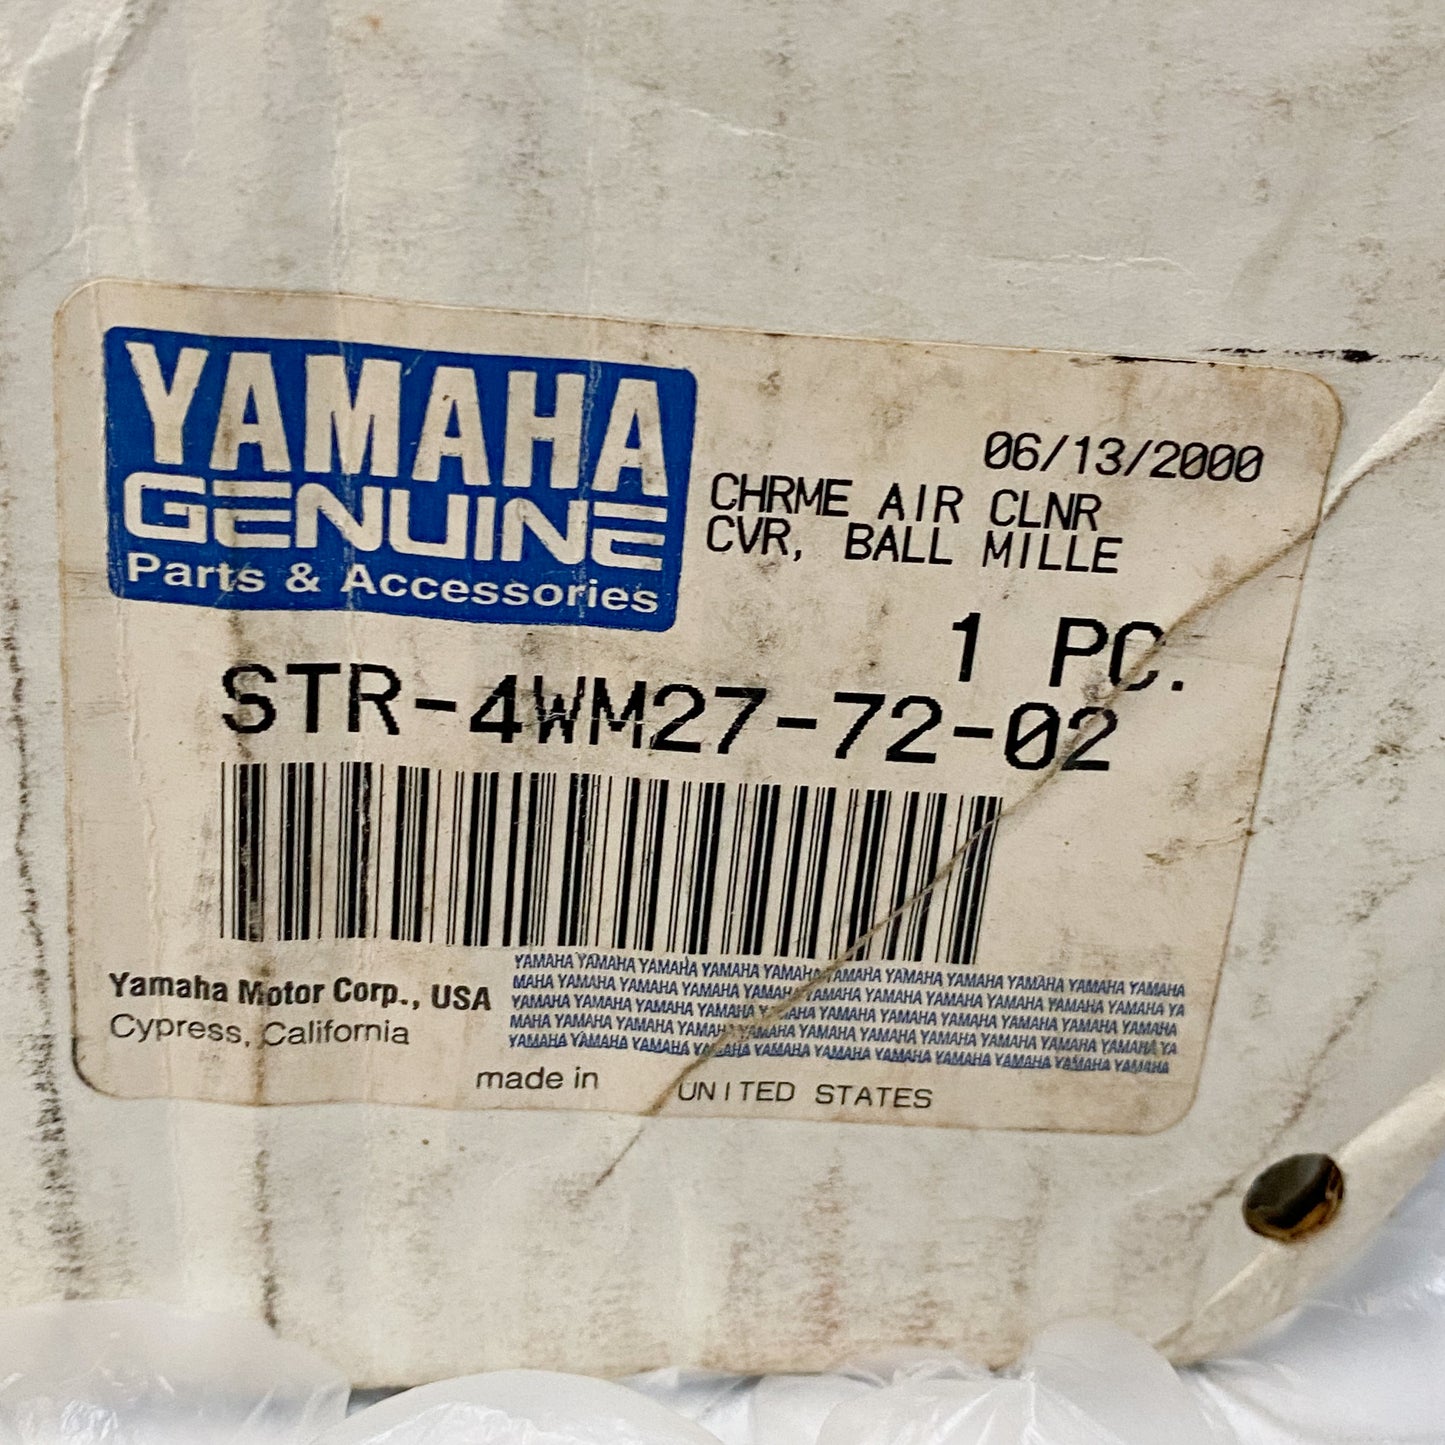 Yamaha Chrome Air Cleaner Cover STR-4WM27-72-02